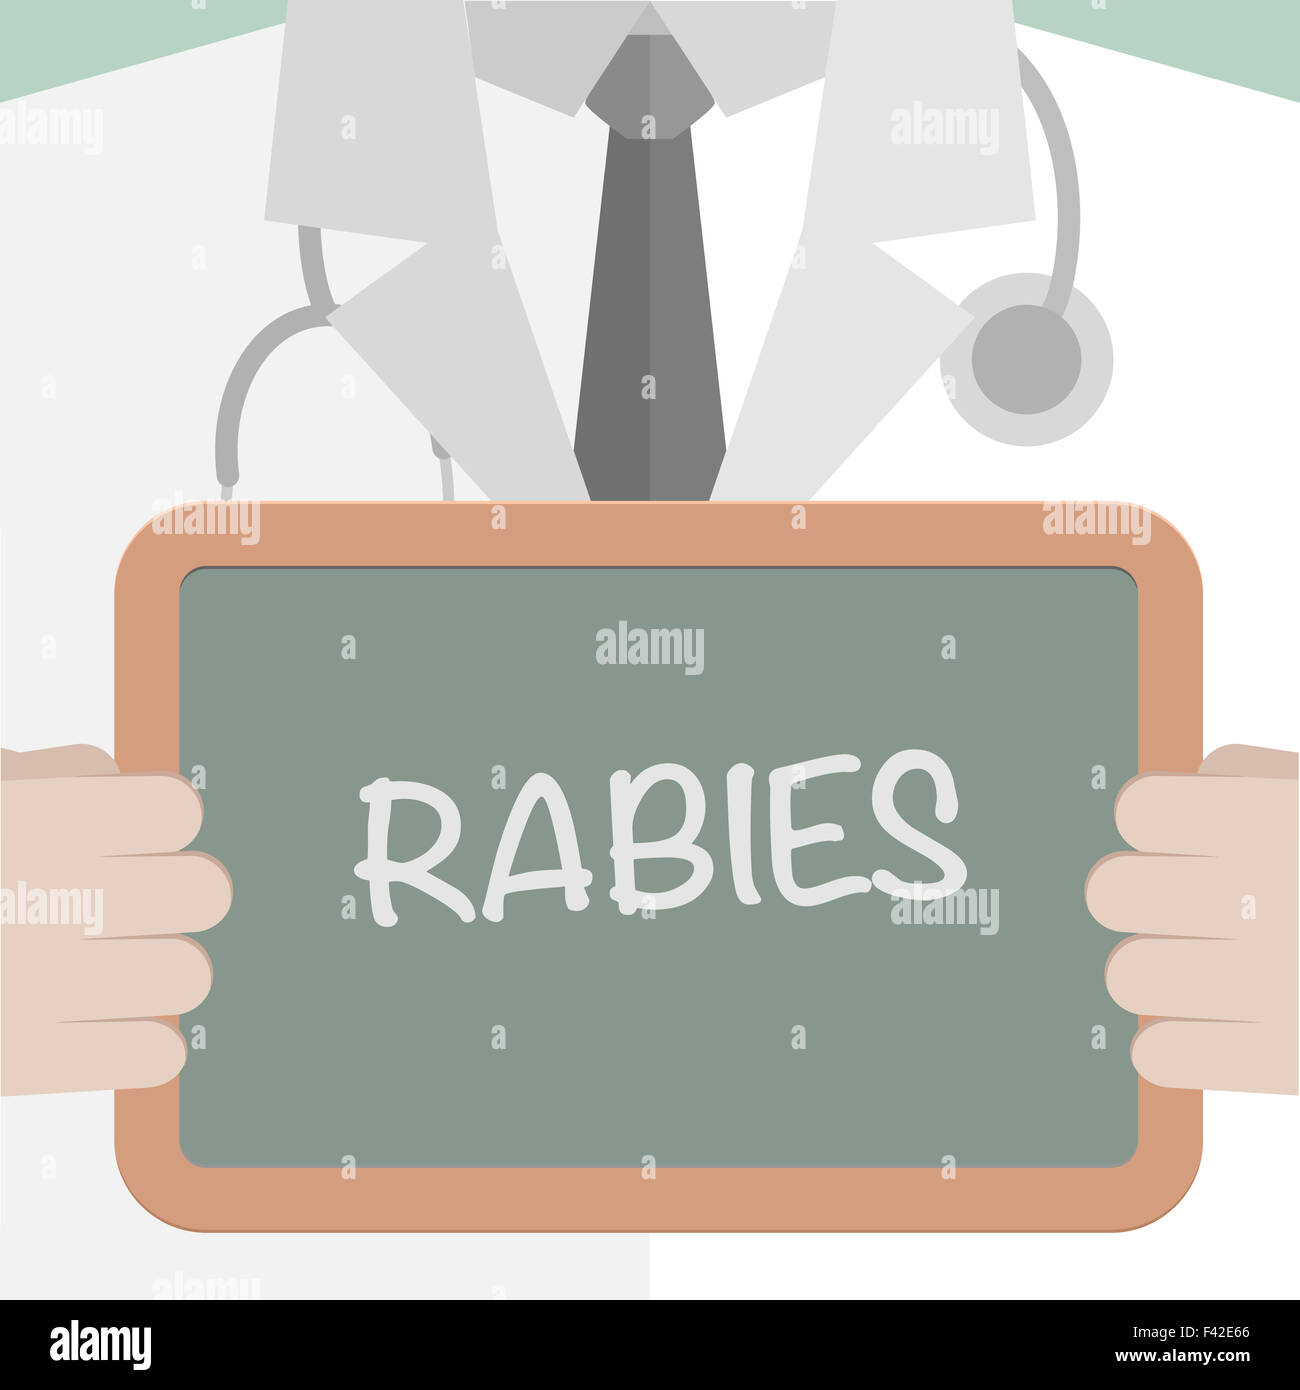 Medical Board Rabies Stock Photo